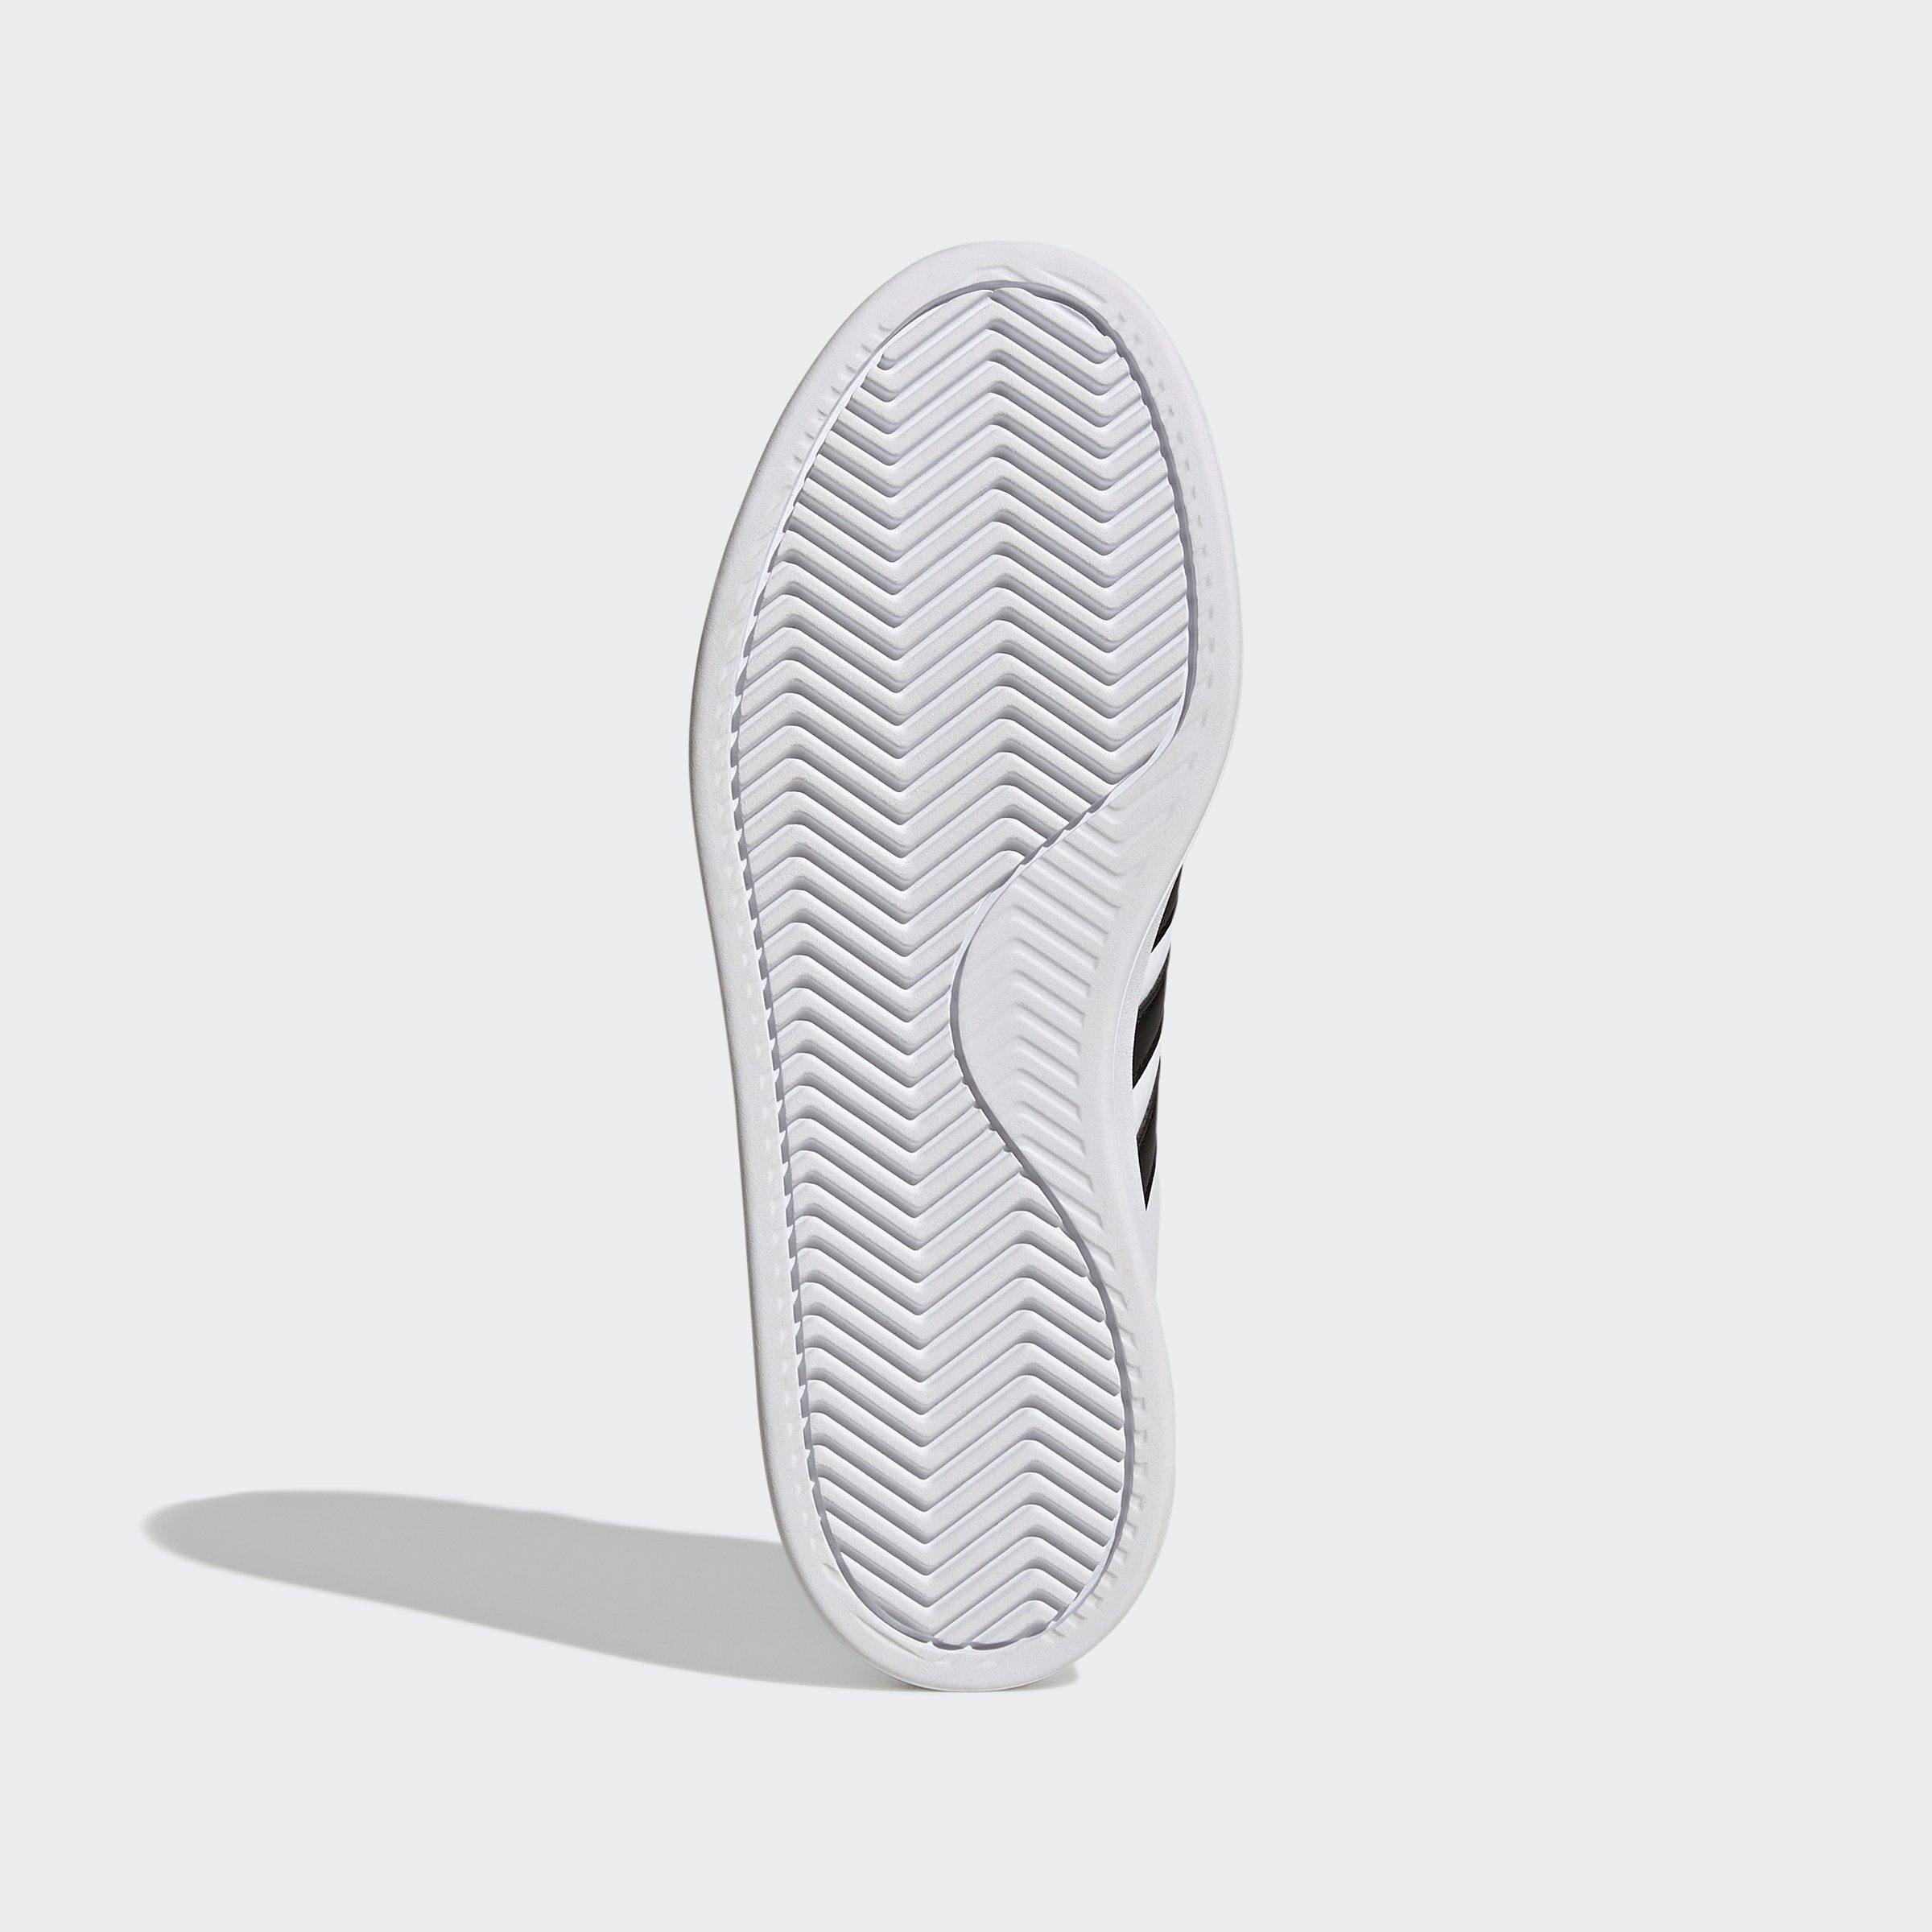 Sneaker Black Cloud Core COURT den COMFORT / White COURT Black adidas GRAND Design Spuren / Sportswear Core CLOUDFOAM LIFESTYLE adidas Superstar auf des